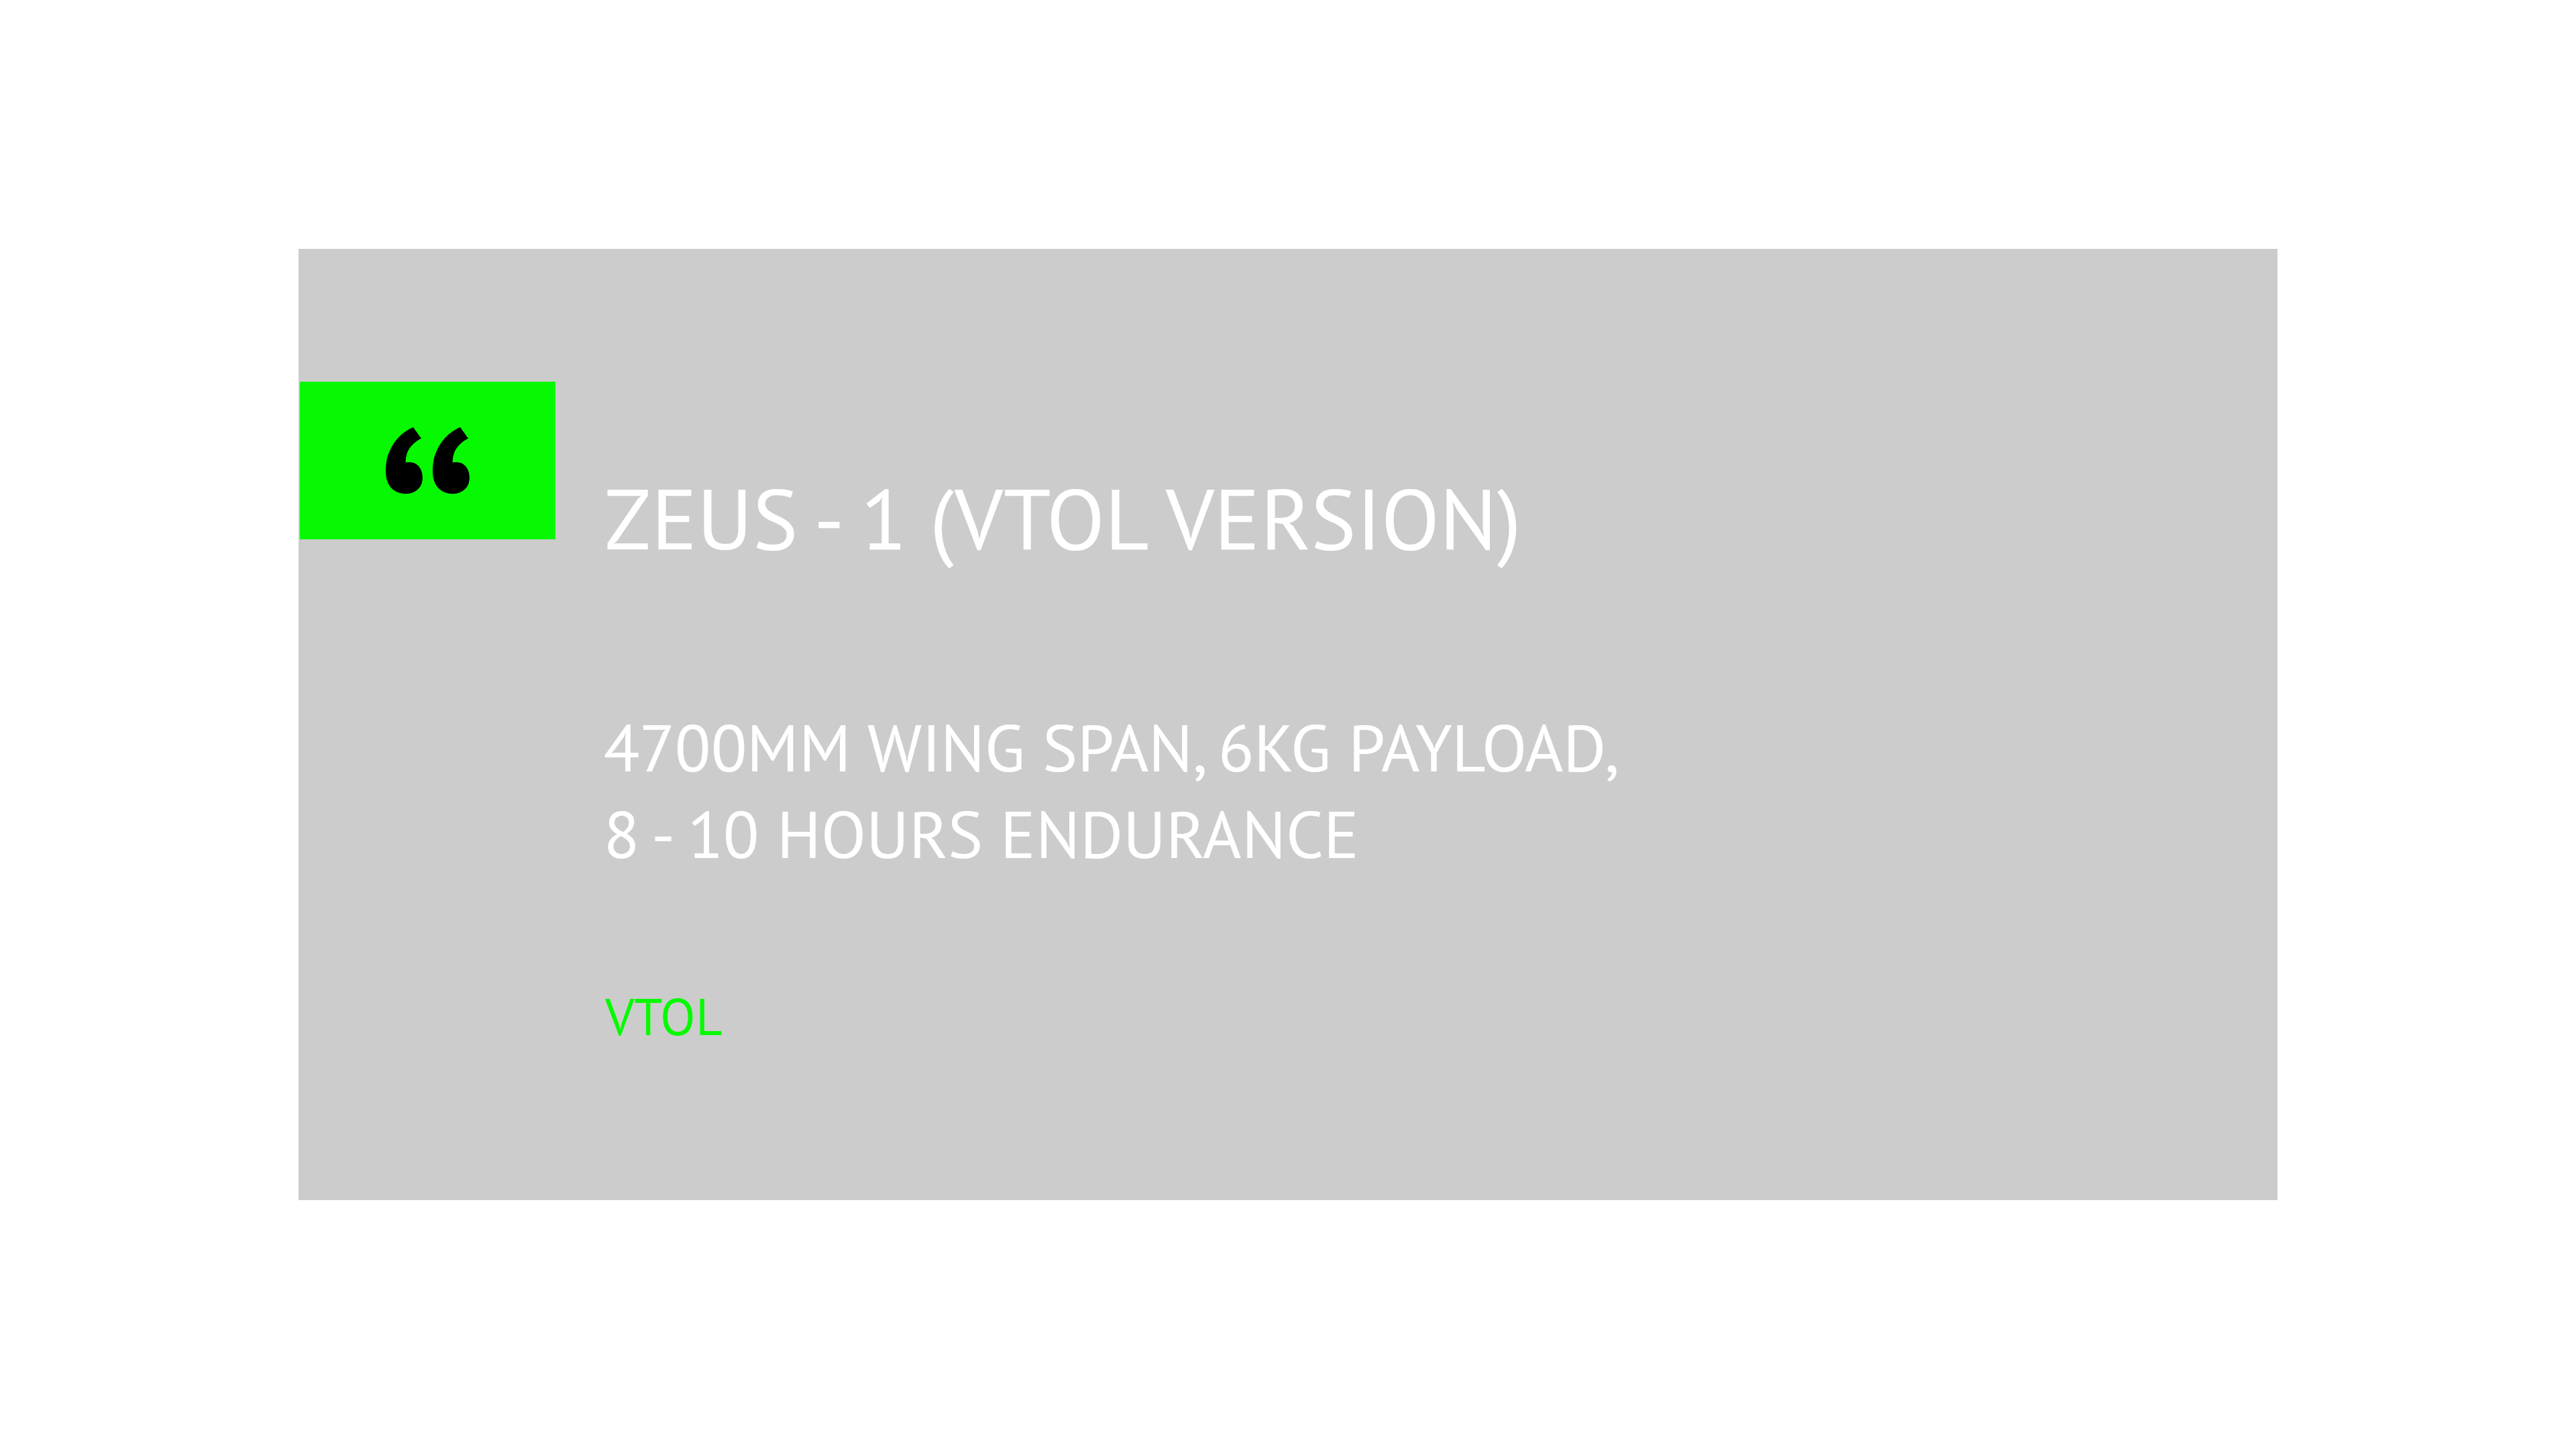 Zeus - 1 info-min